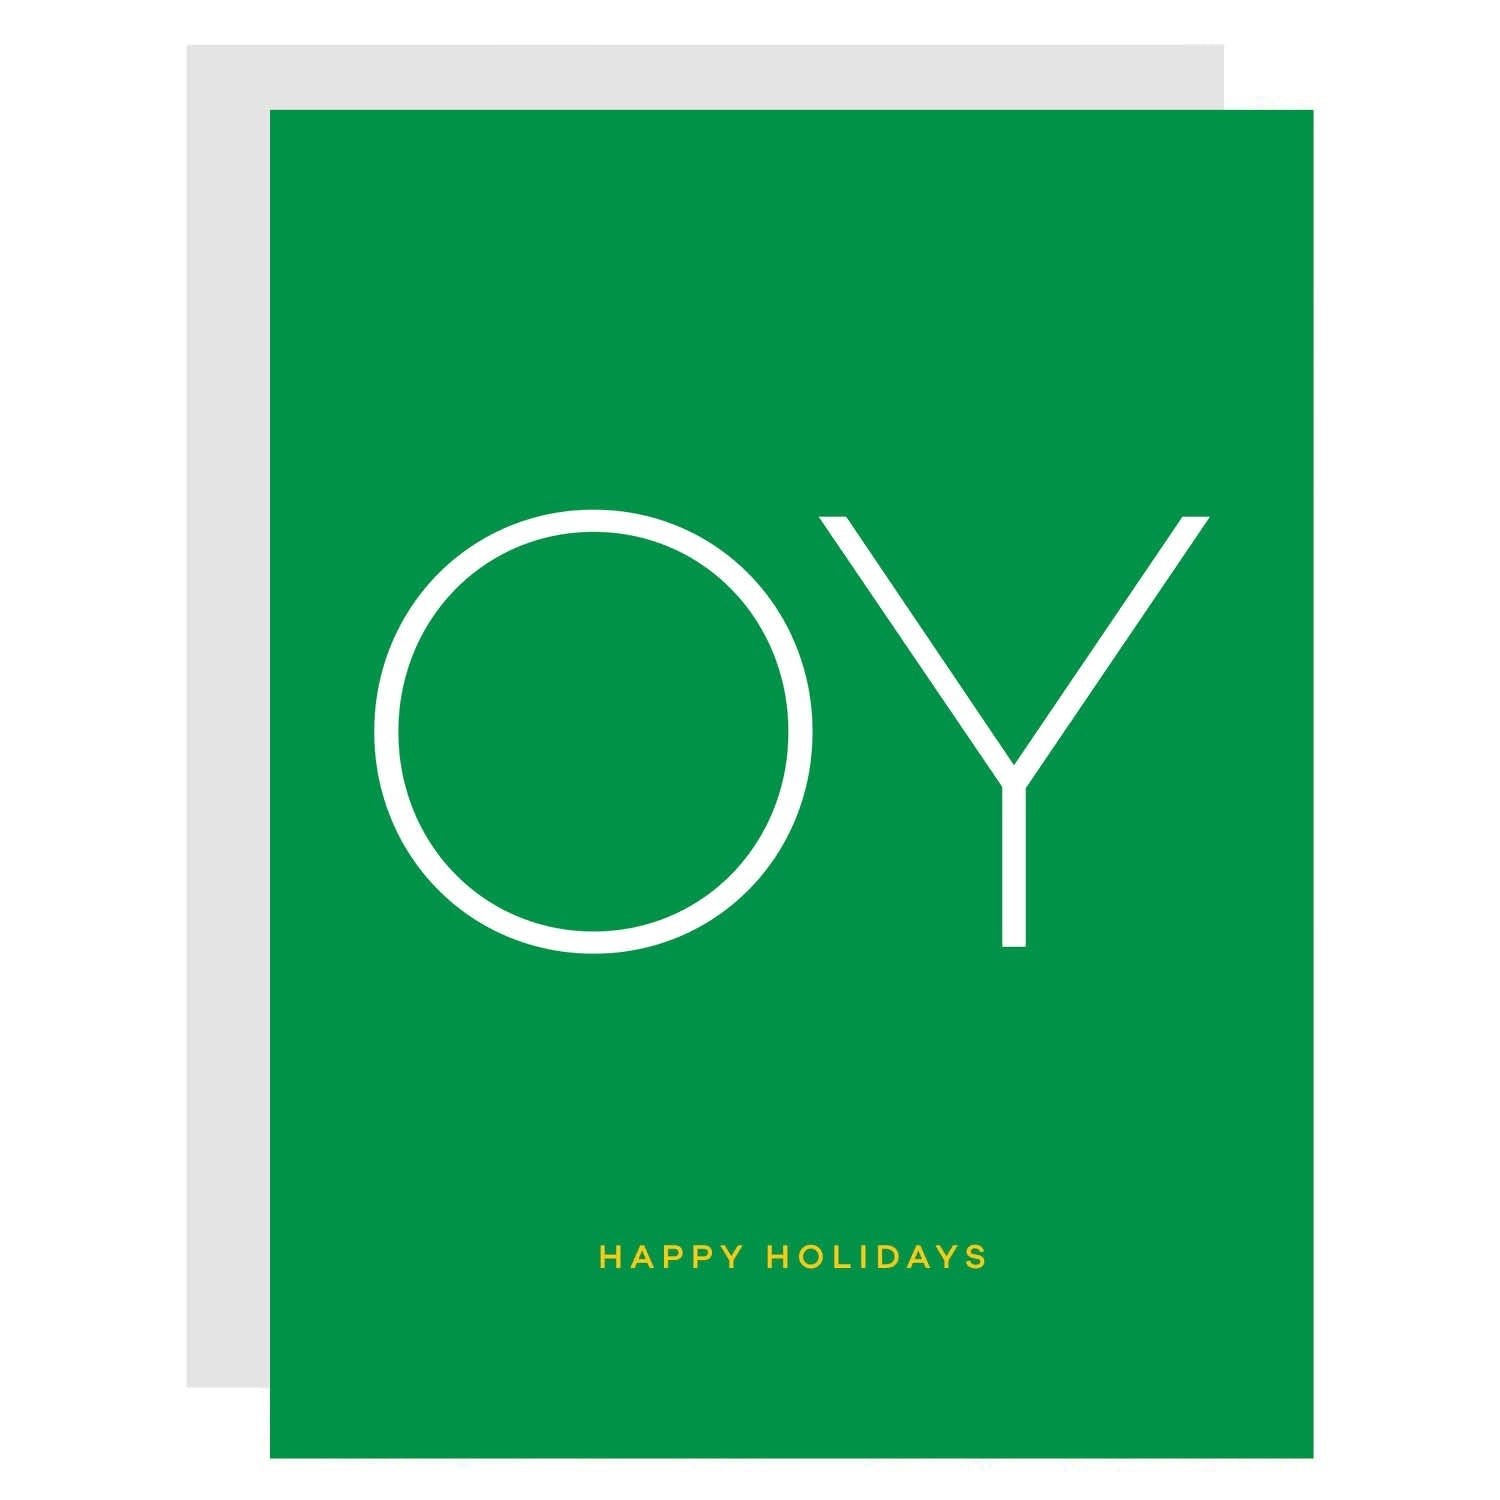 OY Happy Holidays Card - Carla Cards - Bluecashew Kitchen Homestead